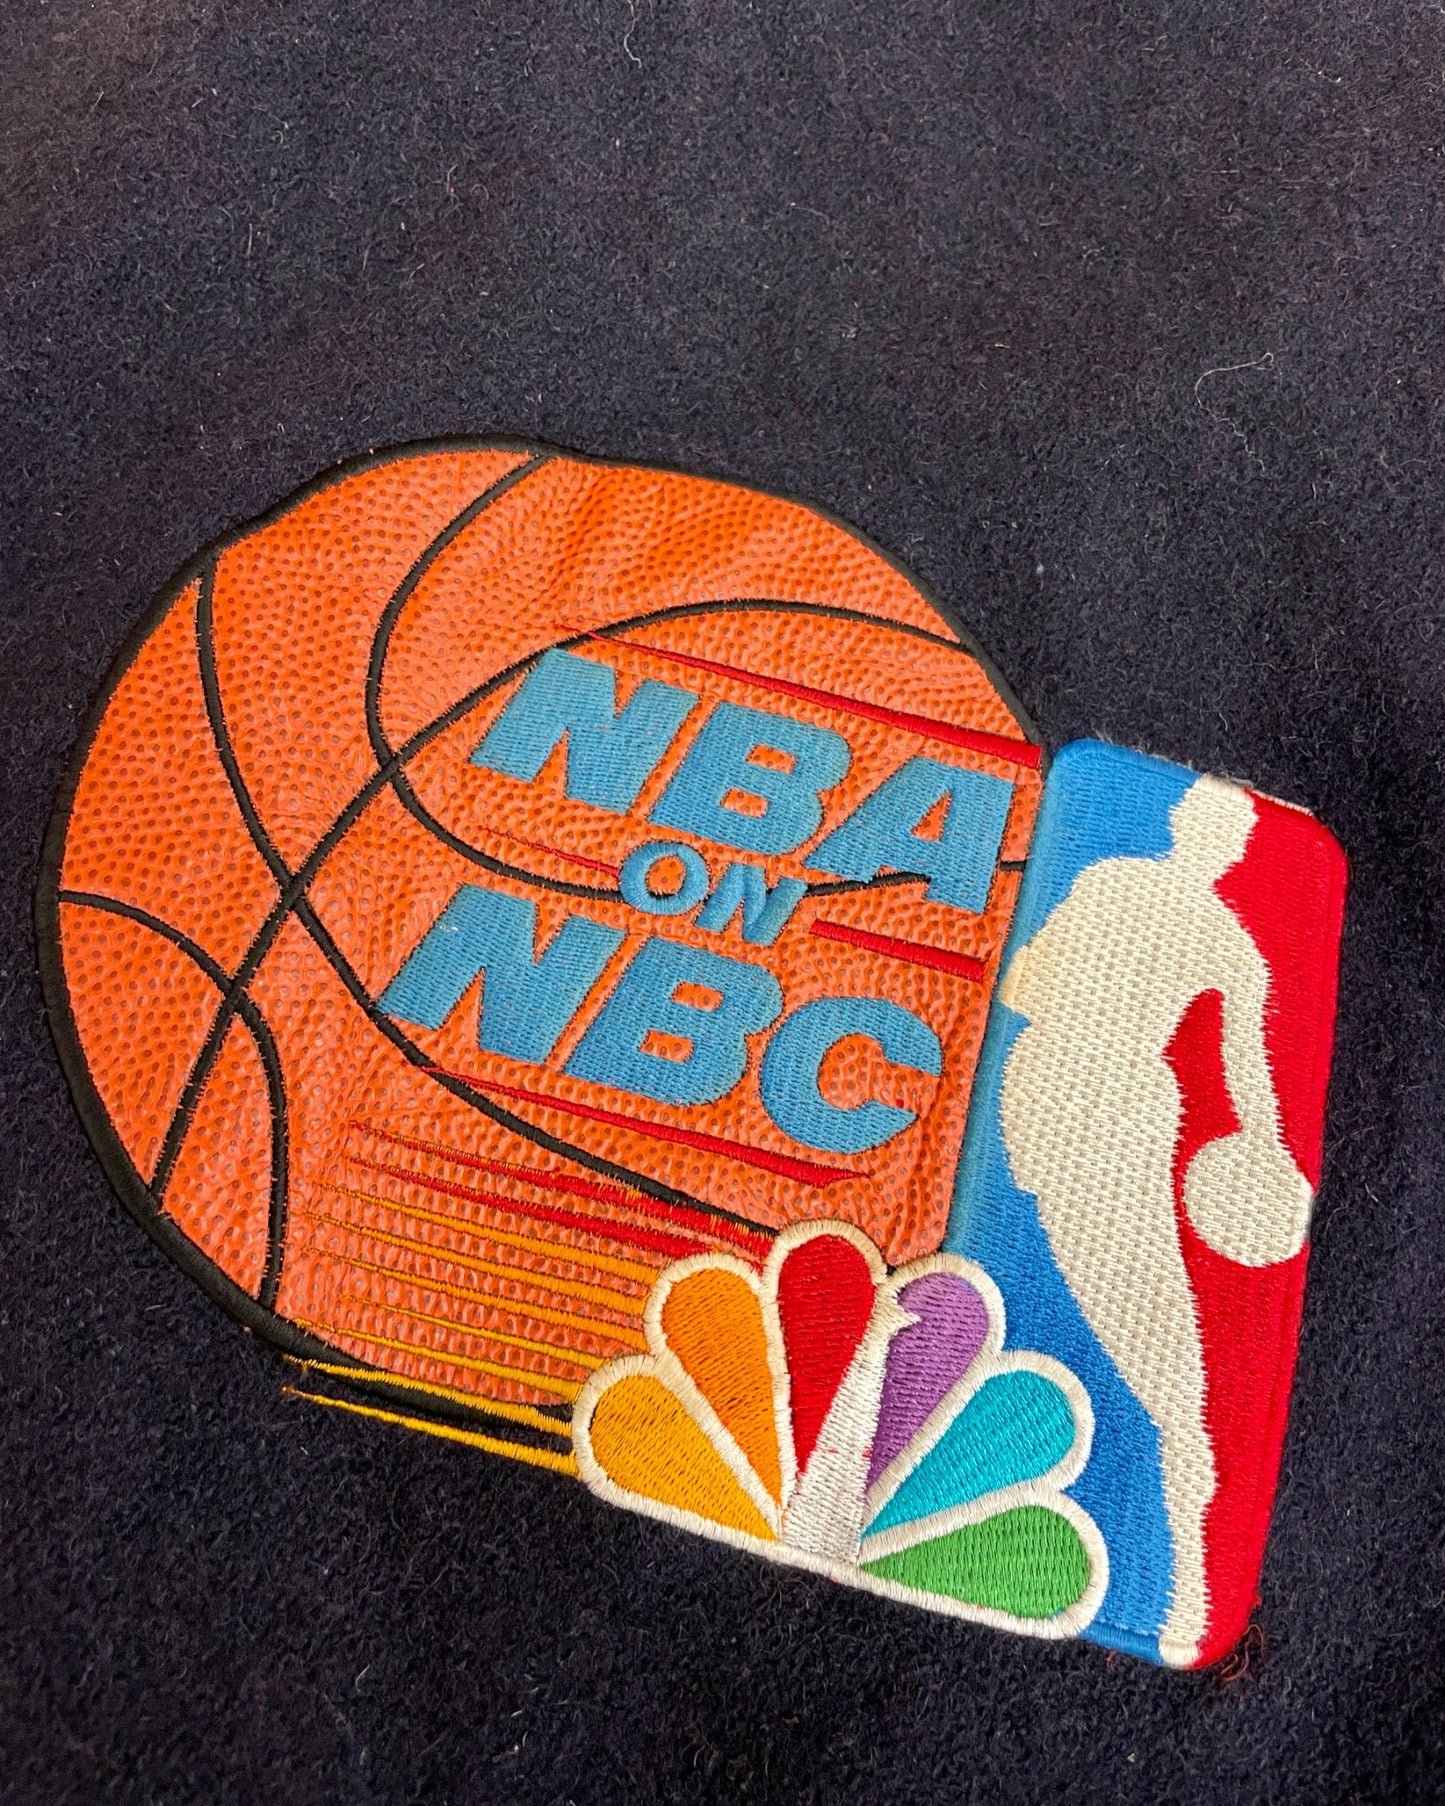 1990s NBA on NBC Varsity Jacket by Identity